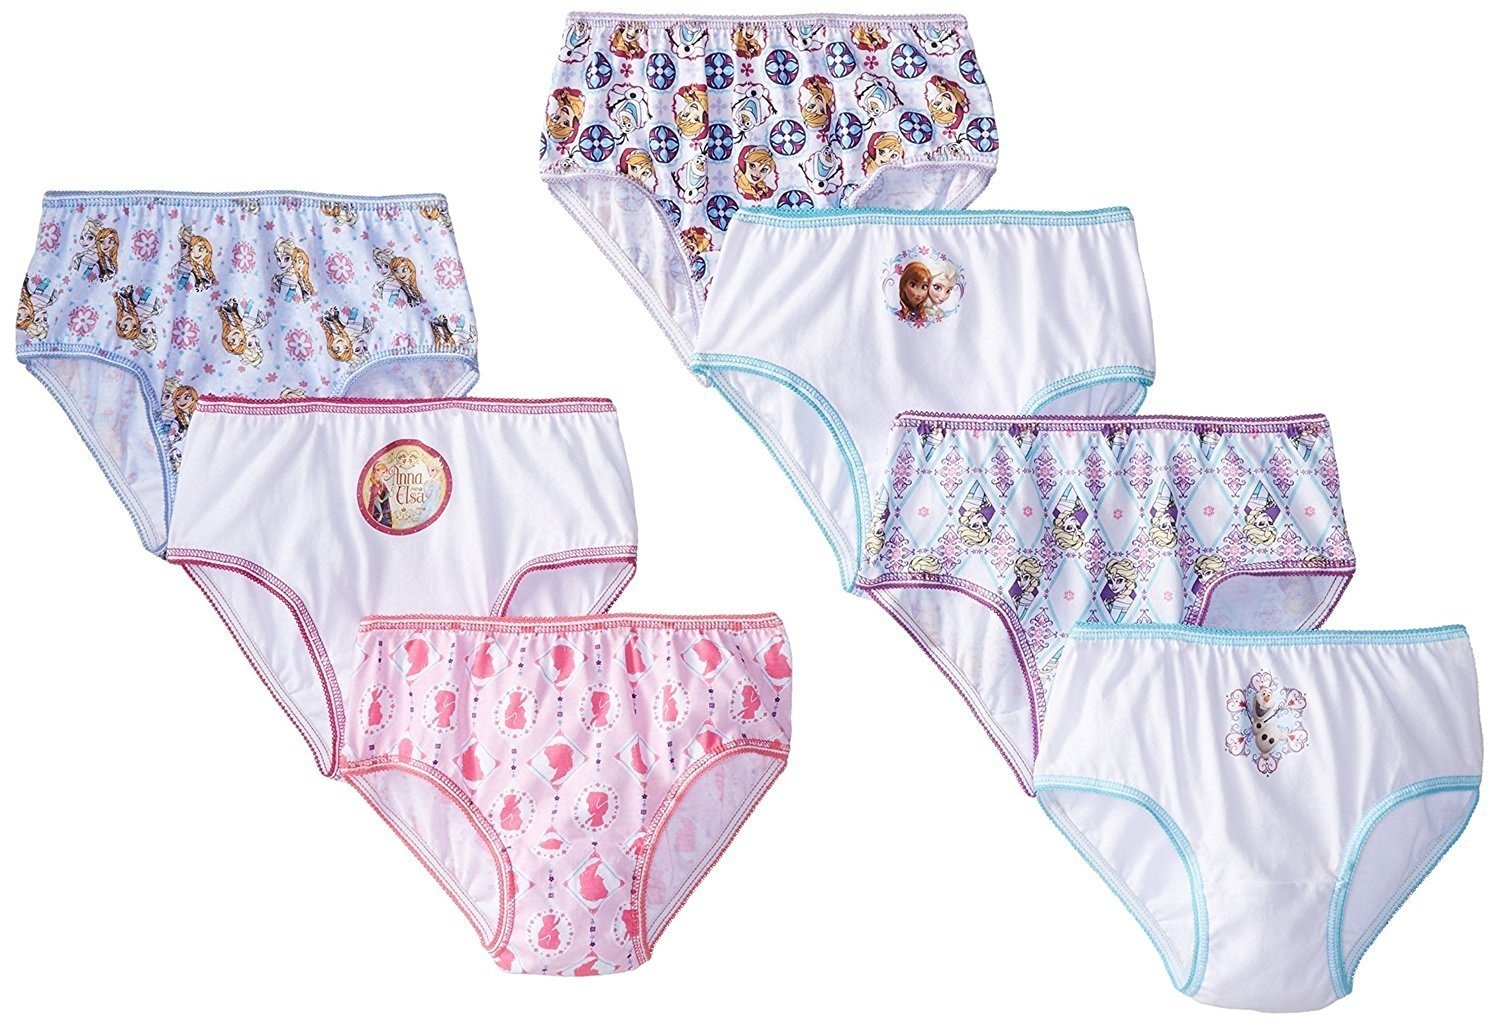 Disney Little Girls' Frozen Panties 7 Pack, Elsa, Anna Underwear - image 1 of 1